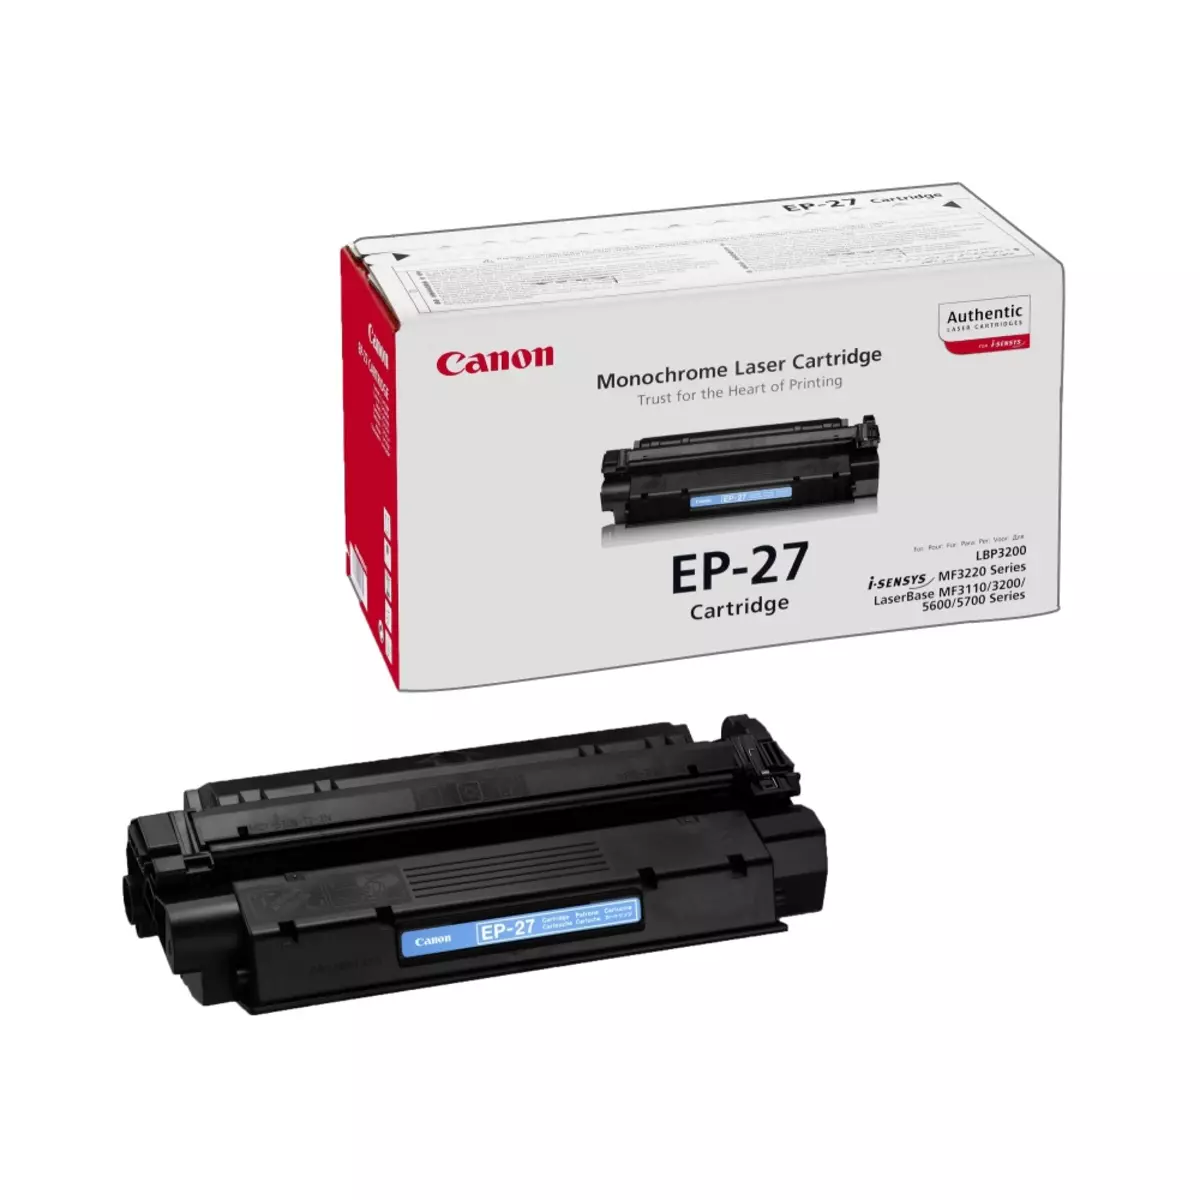 I-Cartridge for canon printer